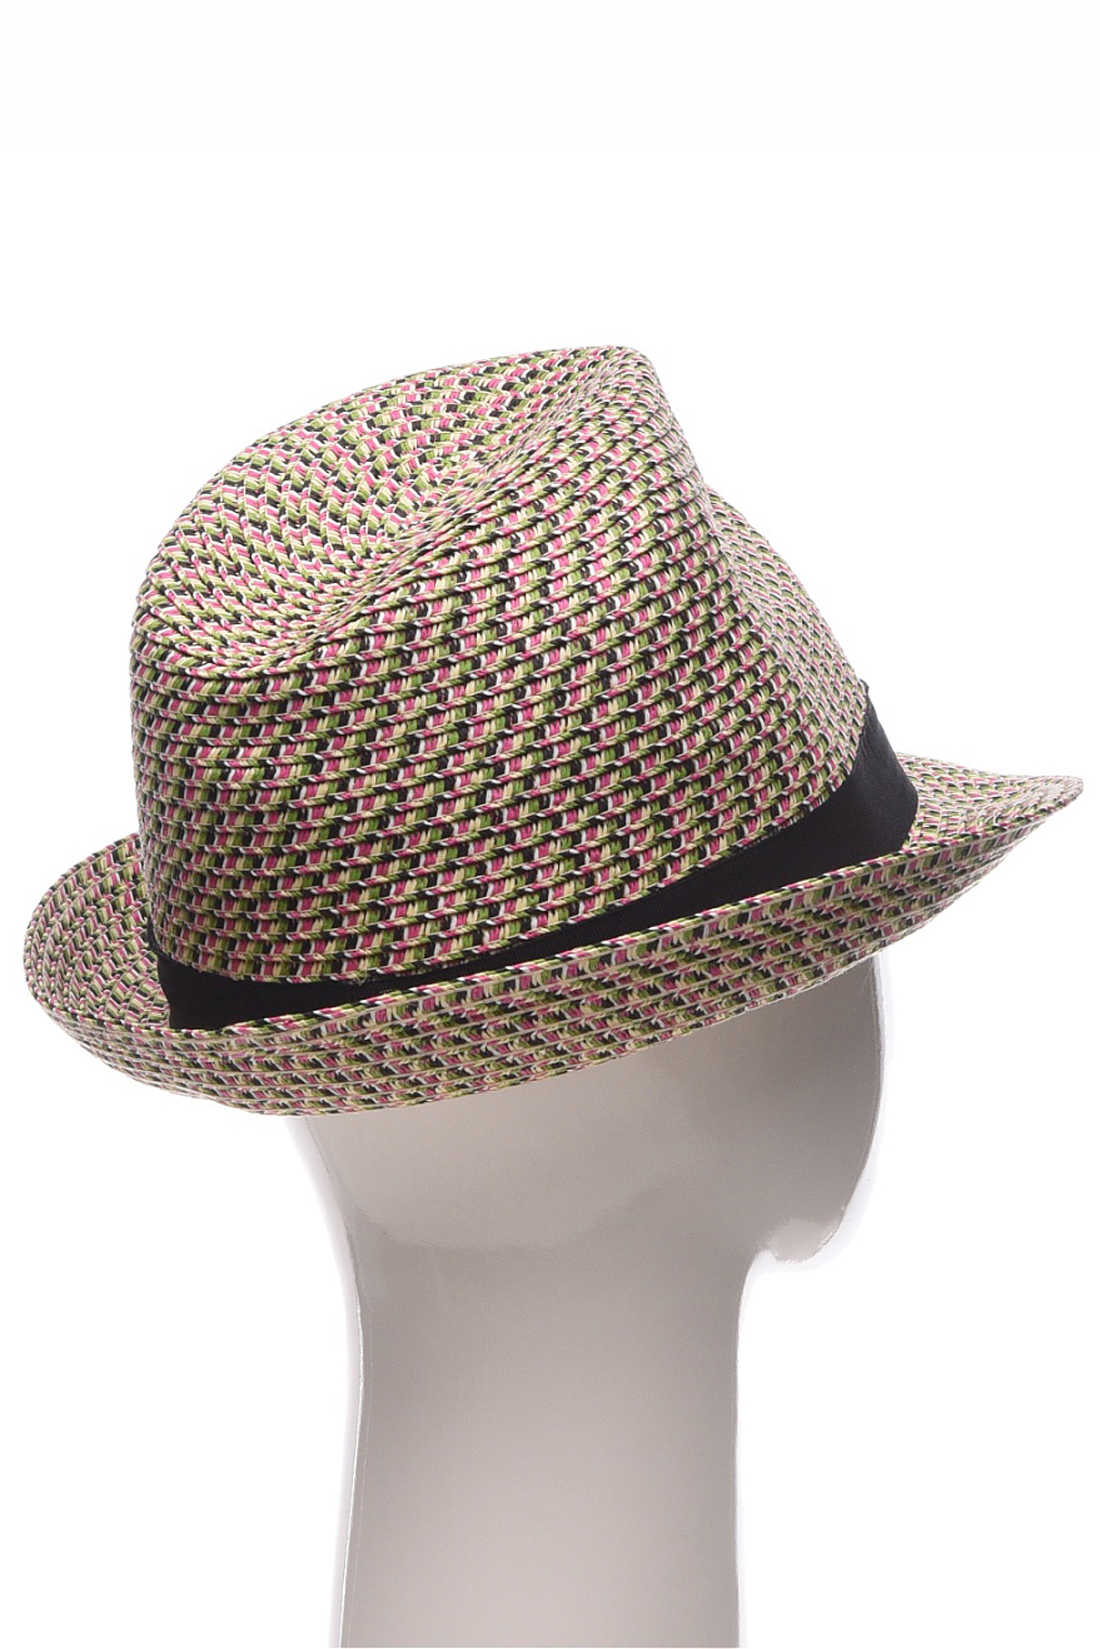 Шляпа с разноцветным плетением (арт. baon B849001), размер Б/р 58 Шляпа с разноцветным плетением (арт. baon B849001) - фото 2